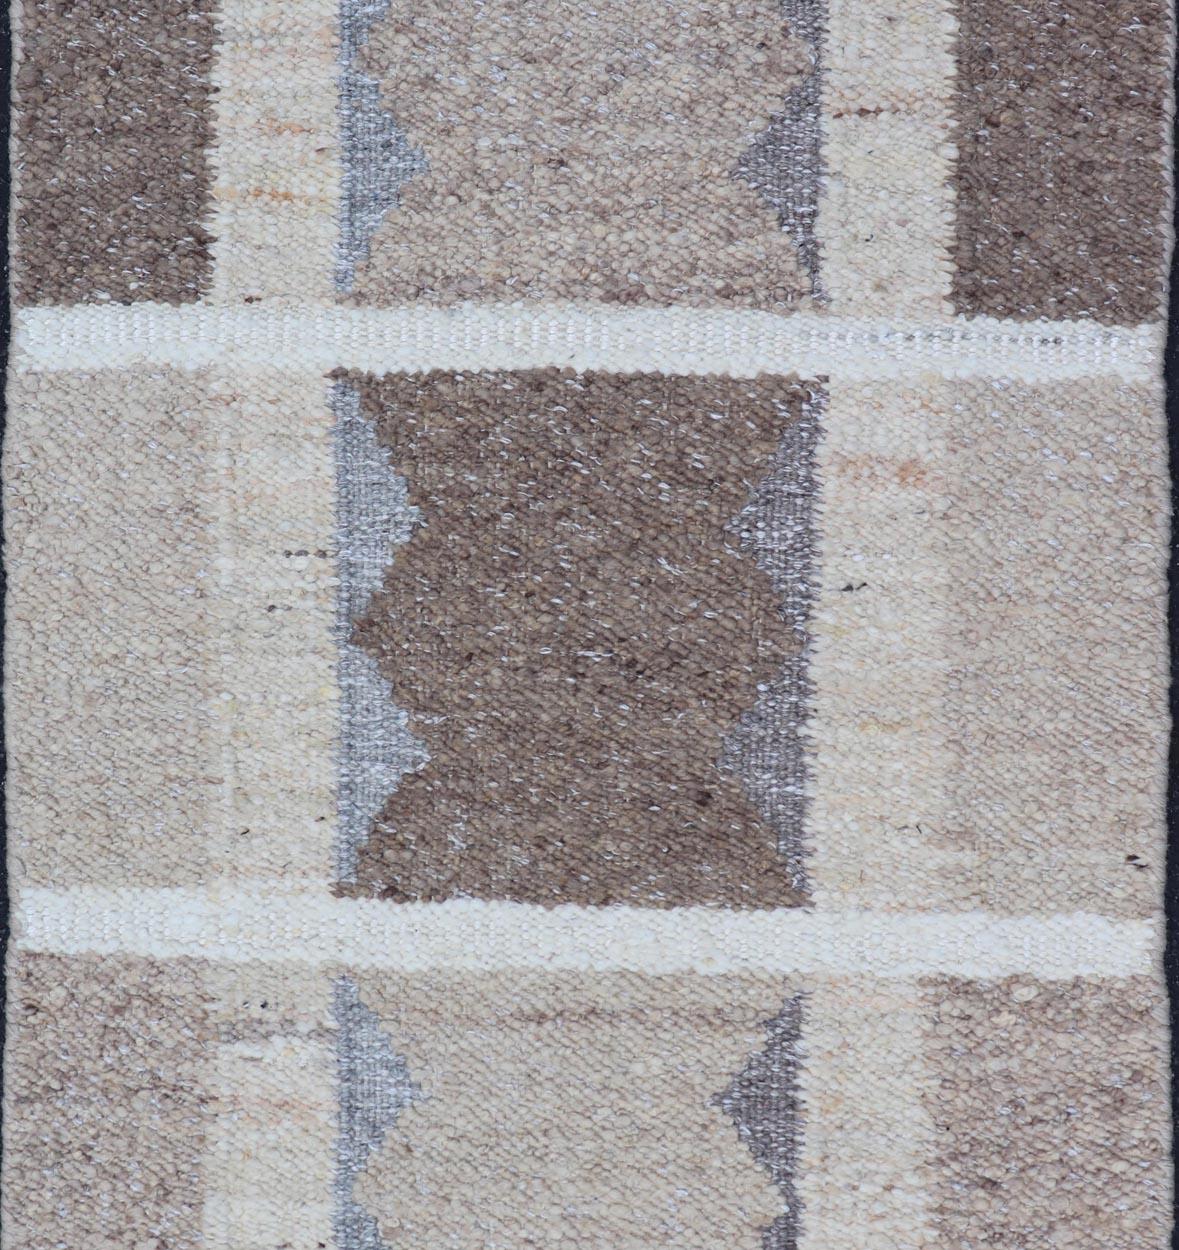 Geometric Modern Scandinavian Flat-Weave Design Rug in Tan, Taupe, and Cream. Keivan Woven Arts / rug RJK-26329-SHB-038-NU, country of origin / type: India / Scandinavian flat-weave, 21st century.
Measures: 3'0 x 5'2 
This Scandinavian flat-weave is